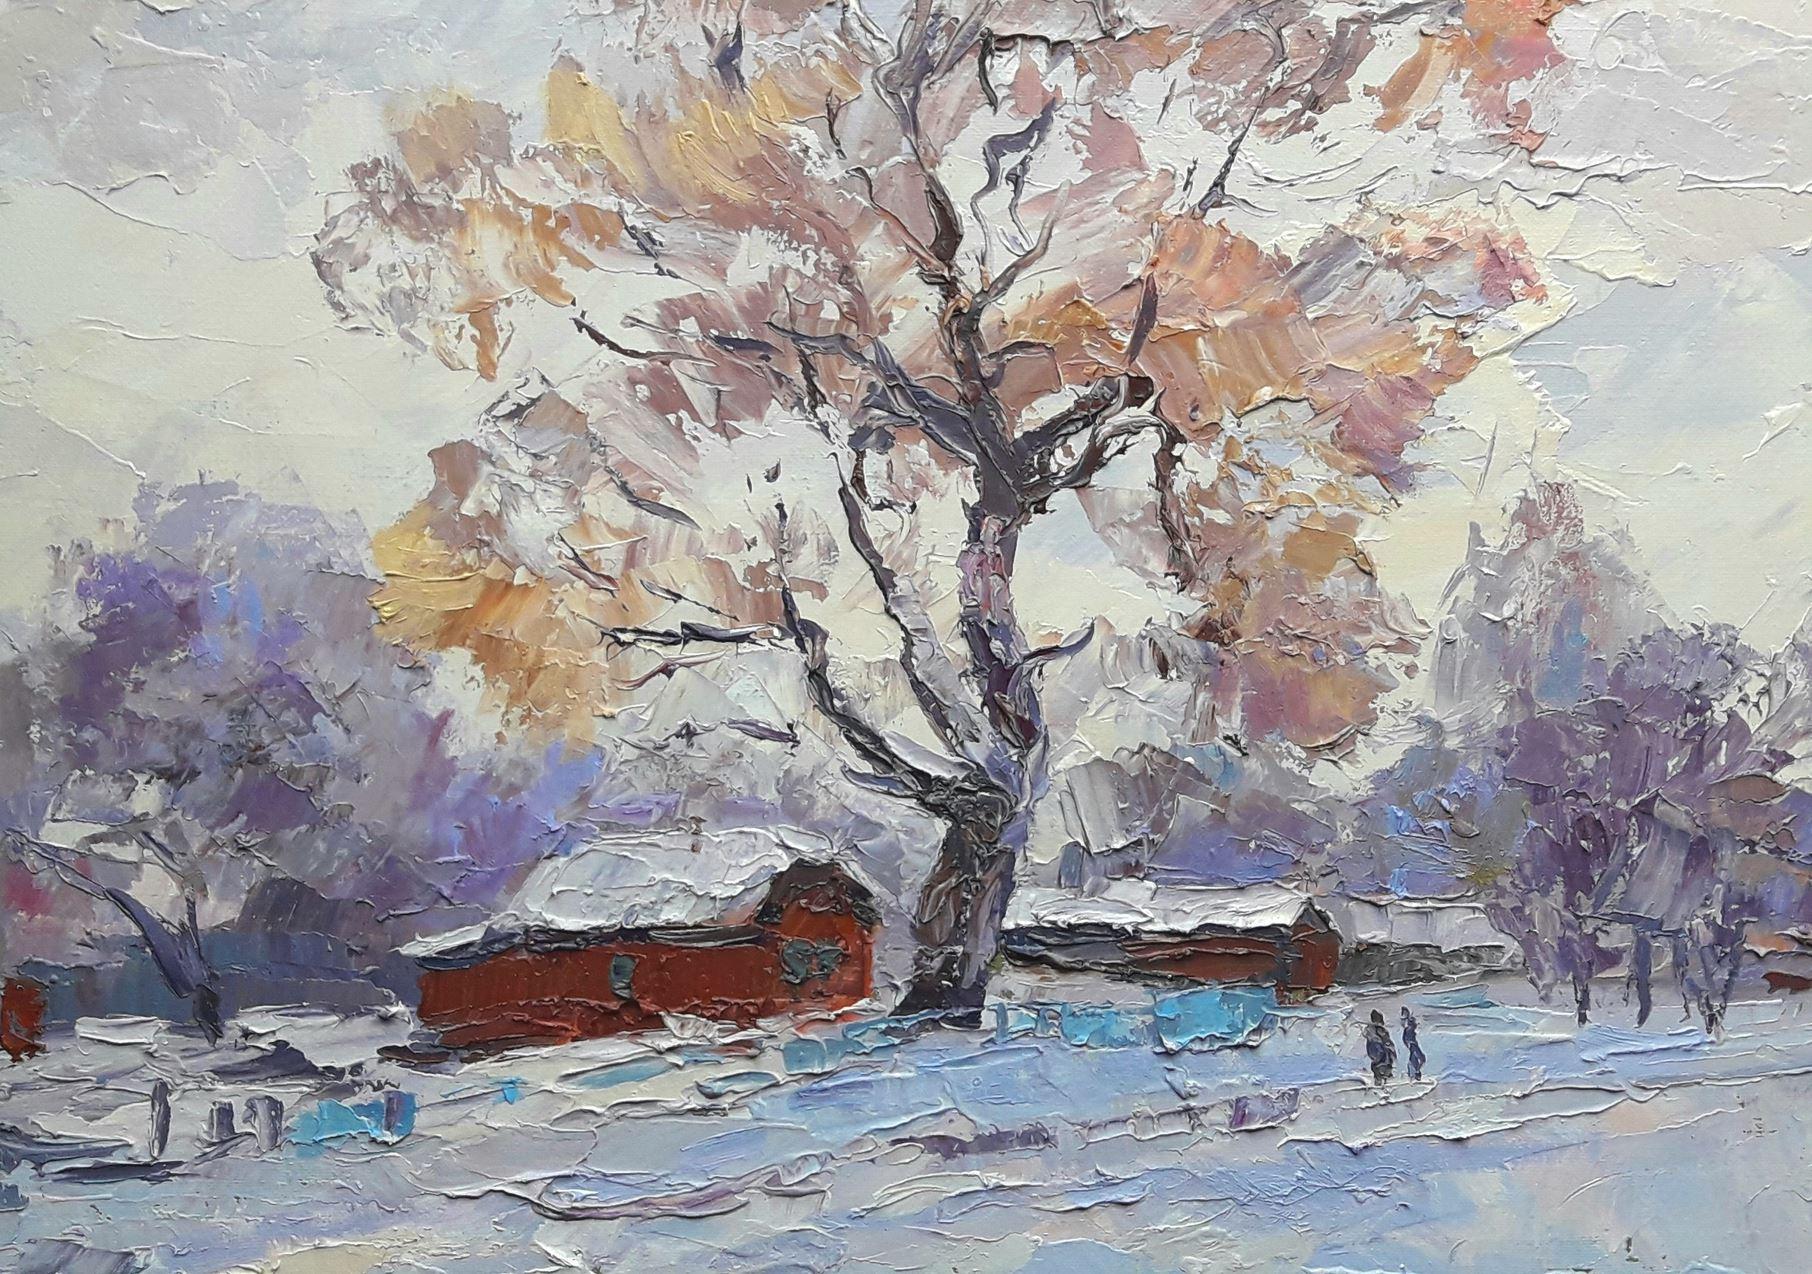 Winter street, Landscape, Original oil Painting, Ready to Hang - Gray Landscape Painting by Boris Serdyuk 